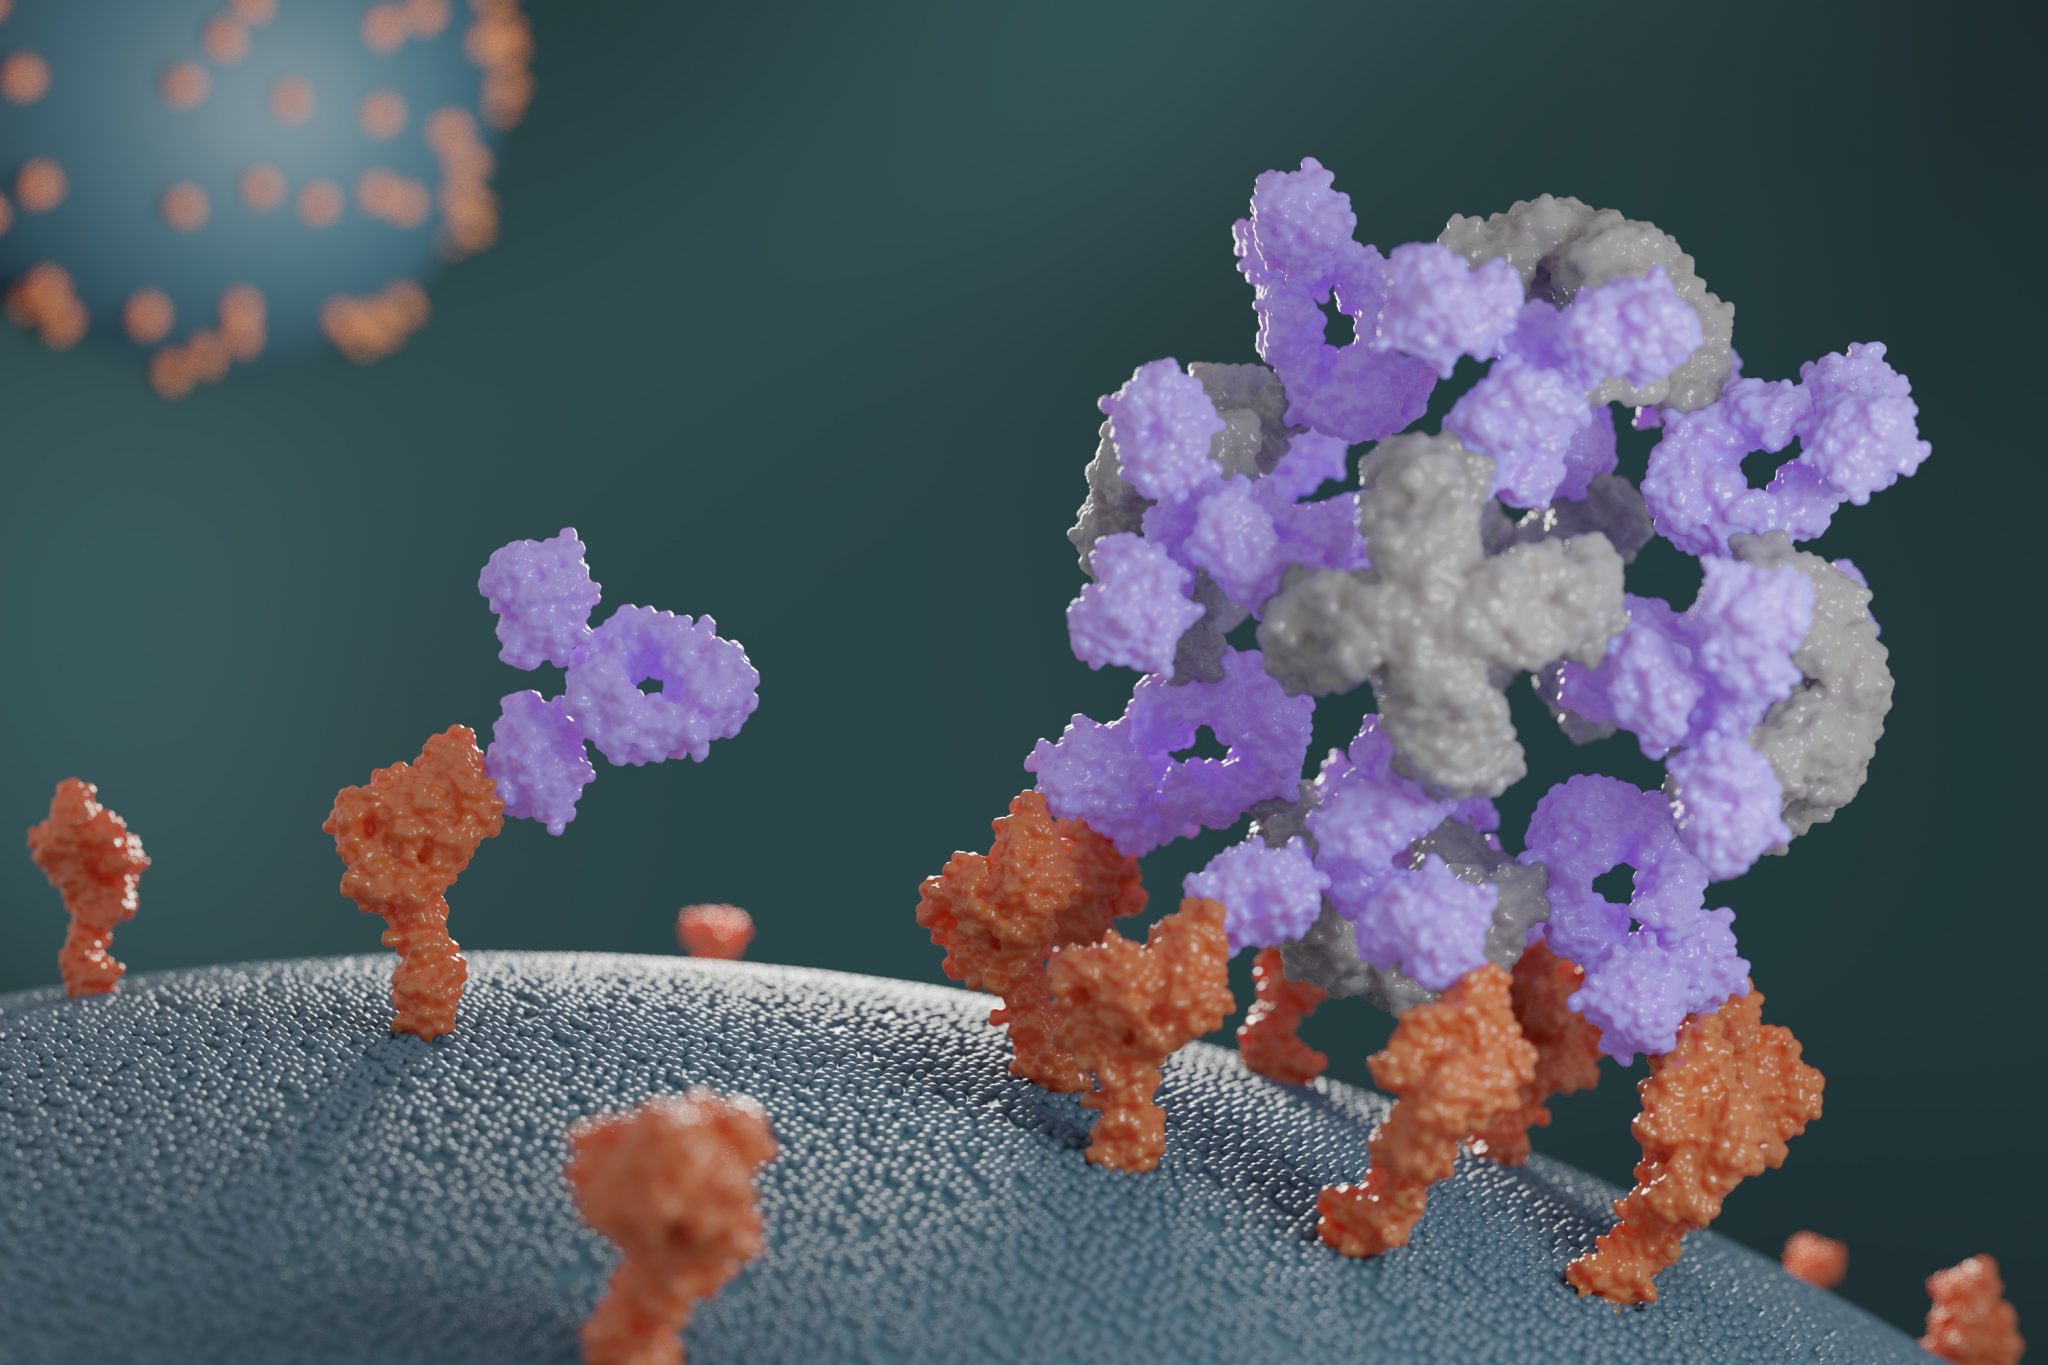 Companion proteins enhance antibody potency